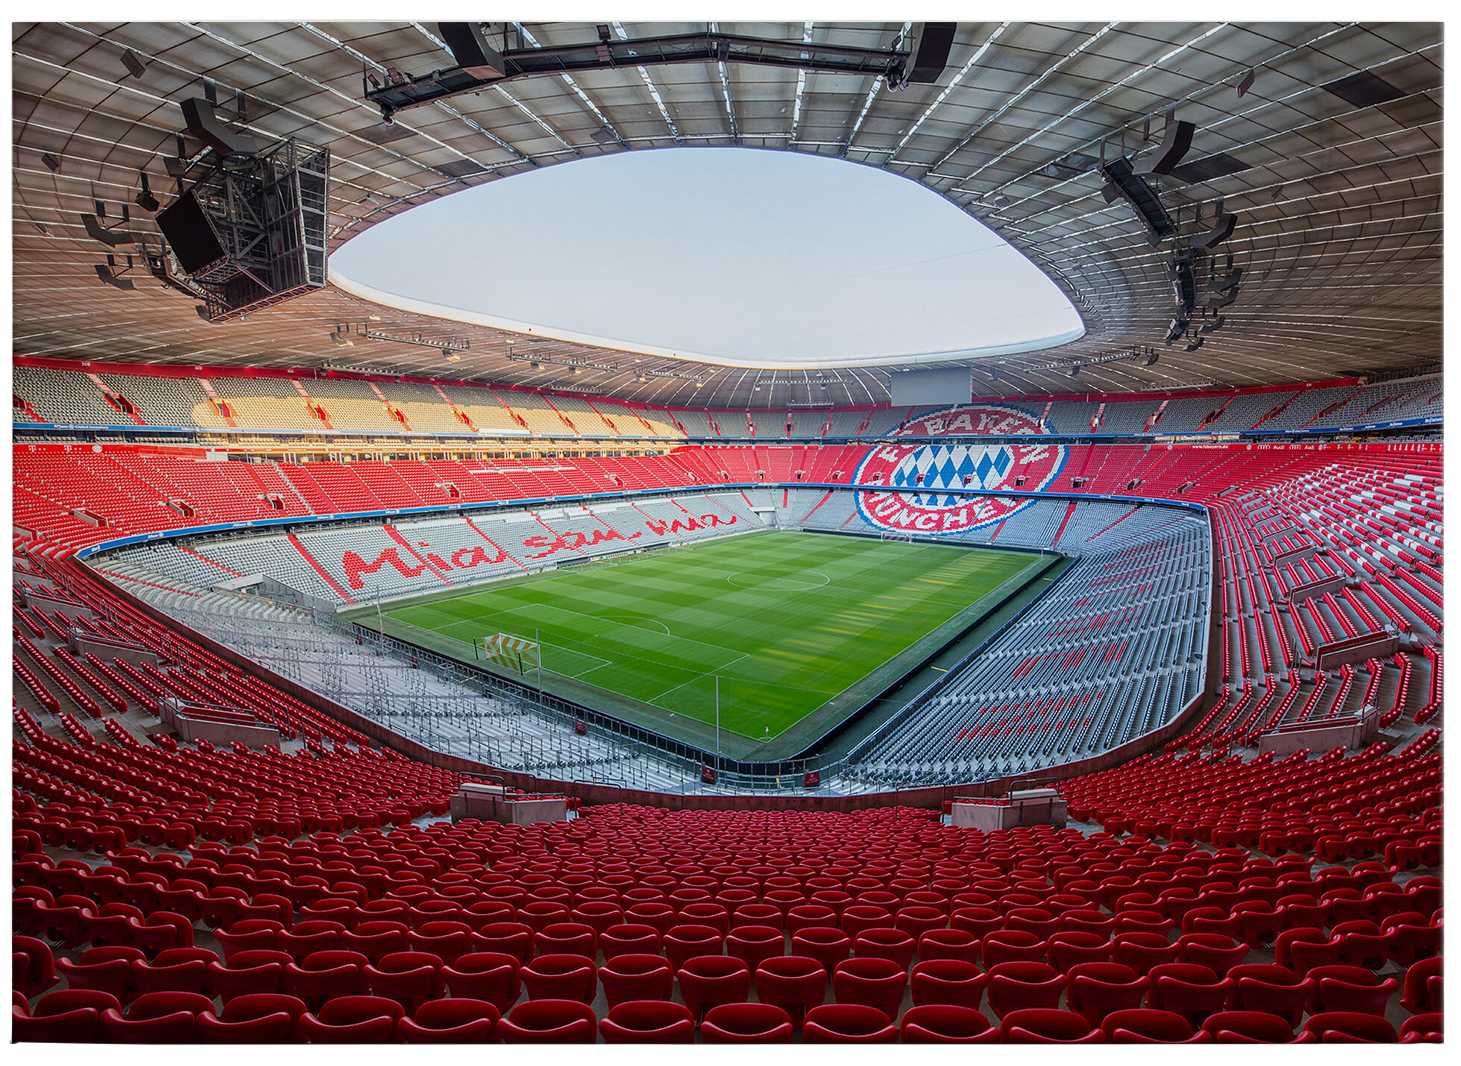             Canvas print FC Bayern stadium – Mia san mia
        